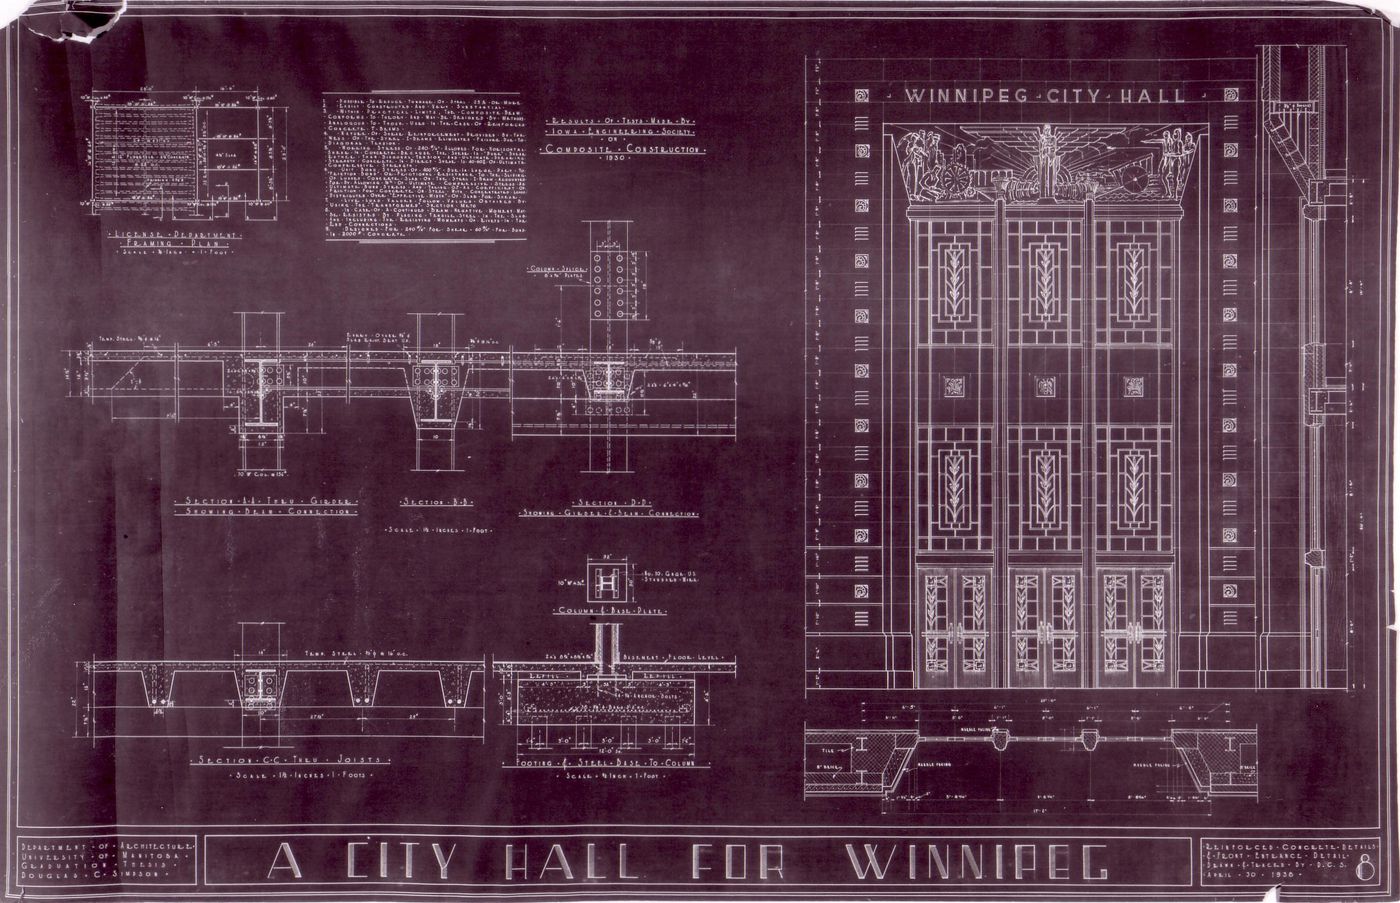 A City Hall for Winnipeg: Reinforced concrete details and front entrance details